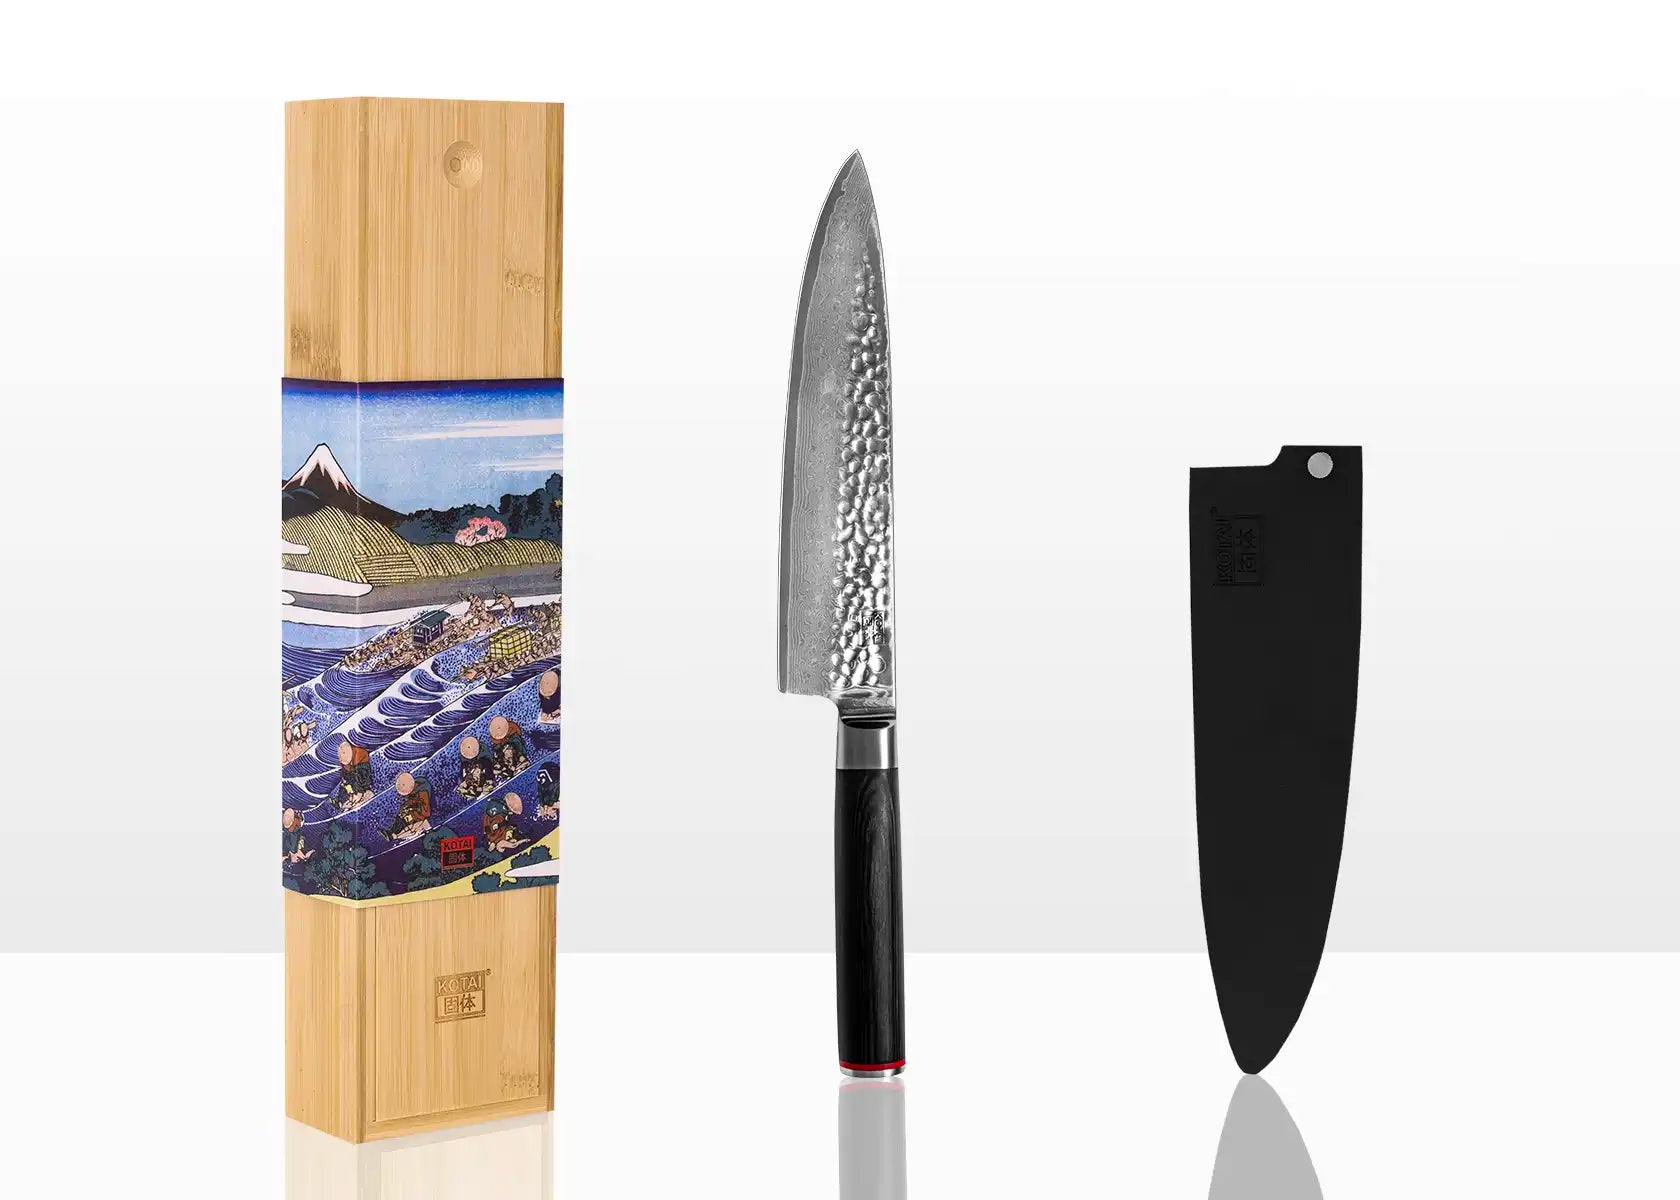 Couteau de Chef Gyuto Damas - Collection Pakka - Lame de 200 mm